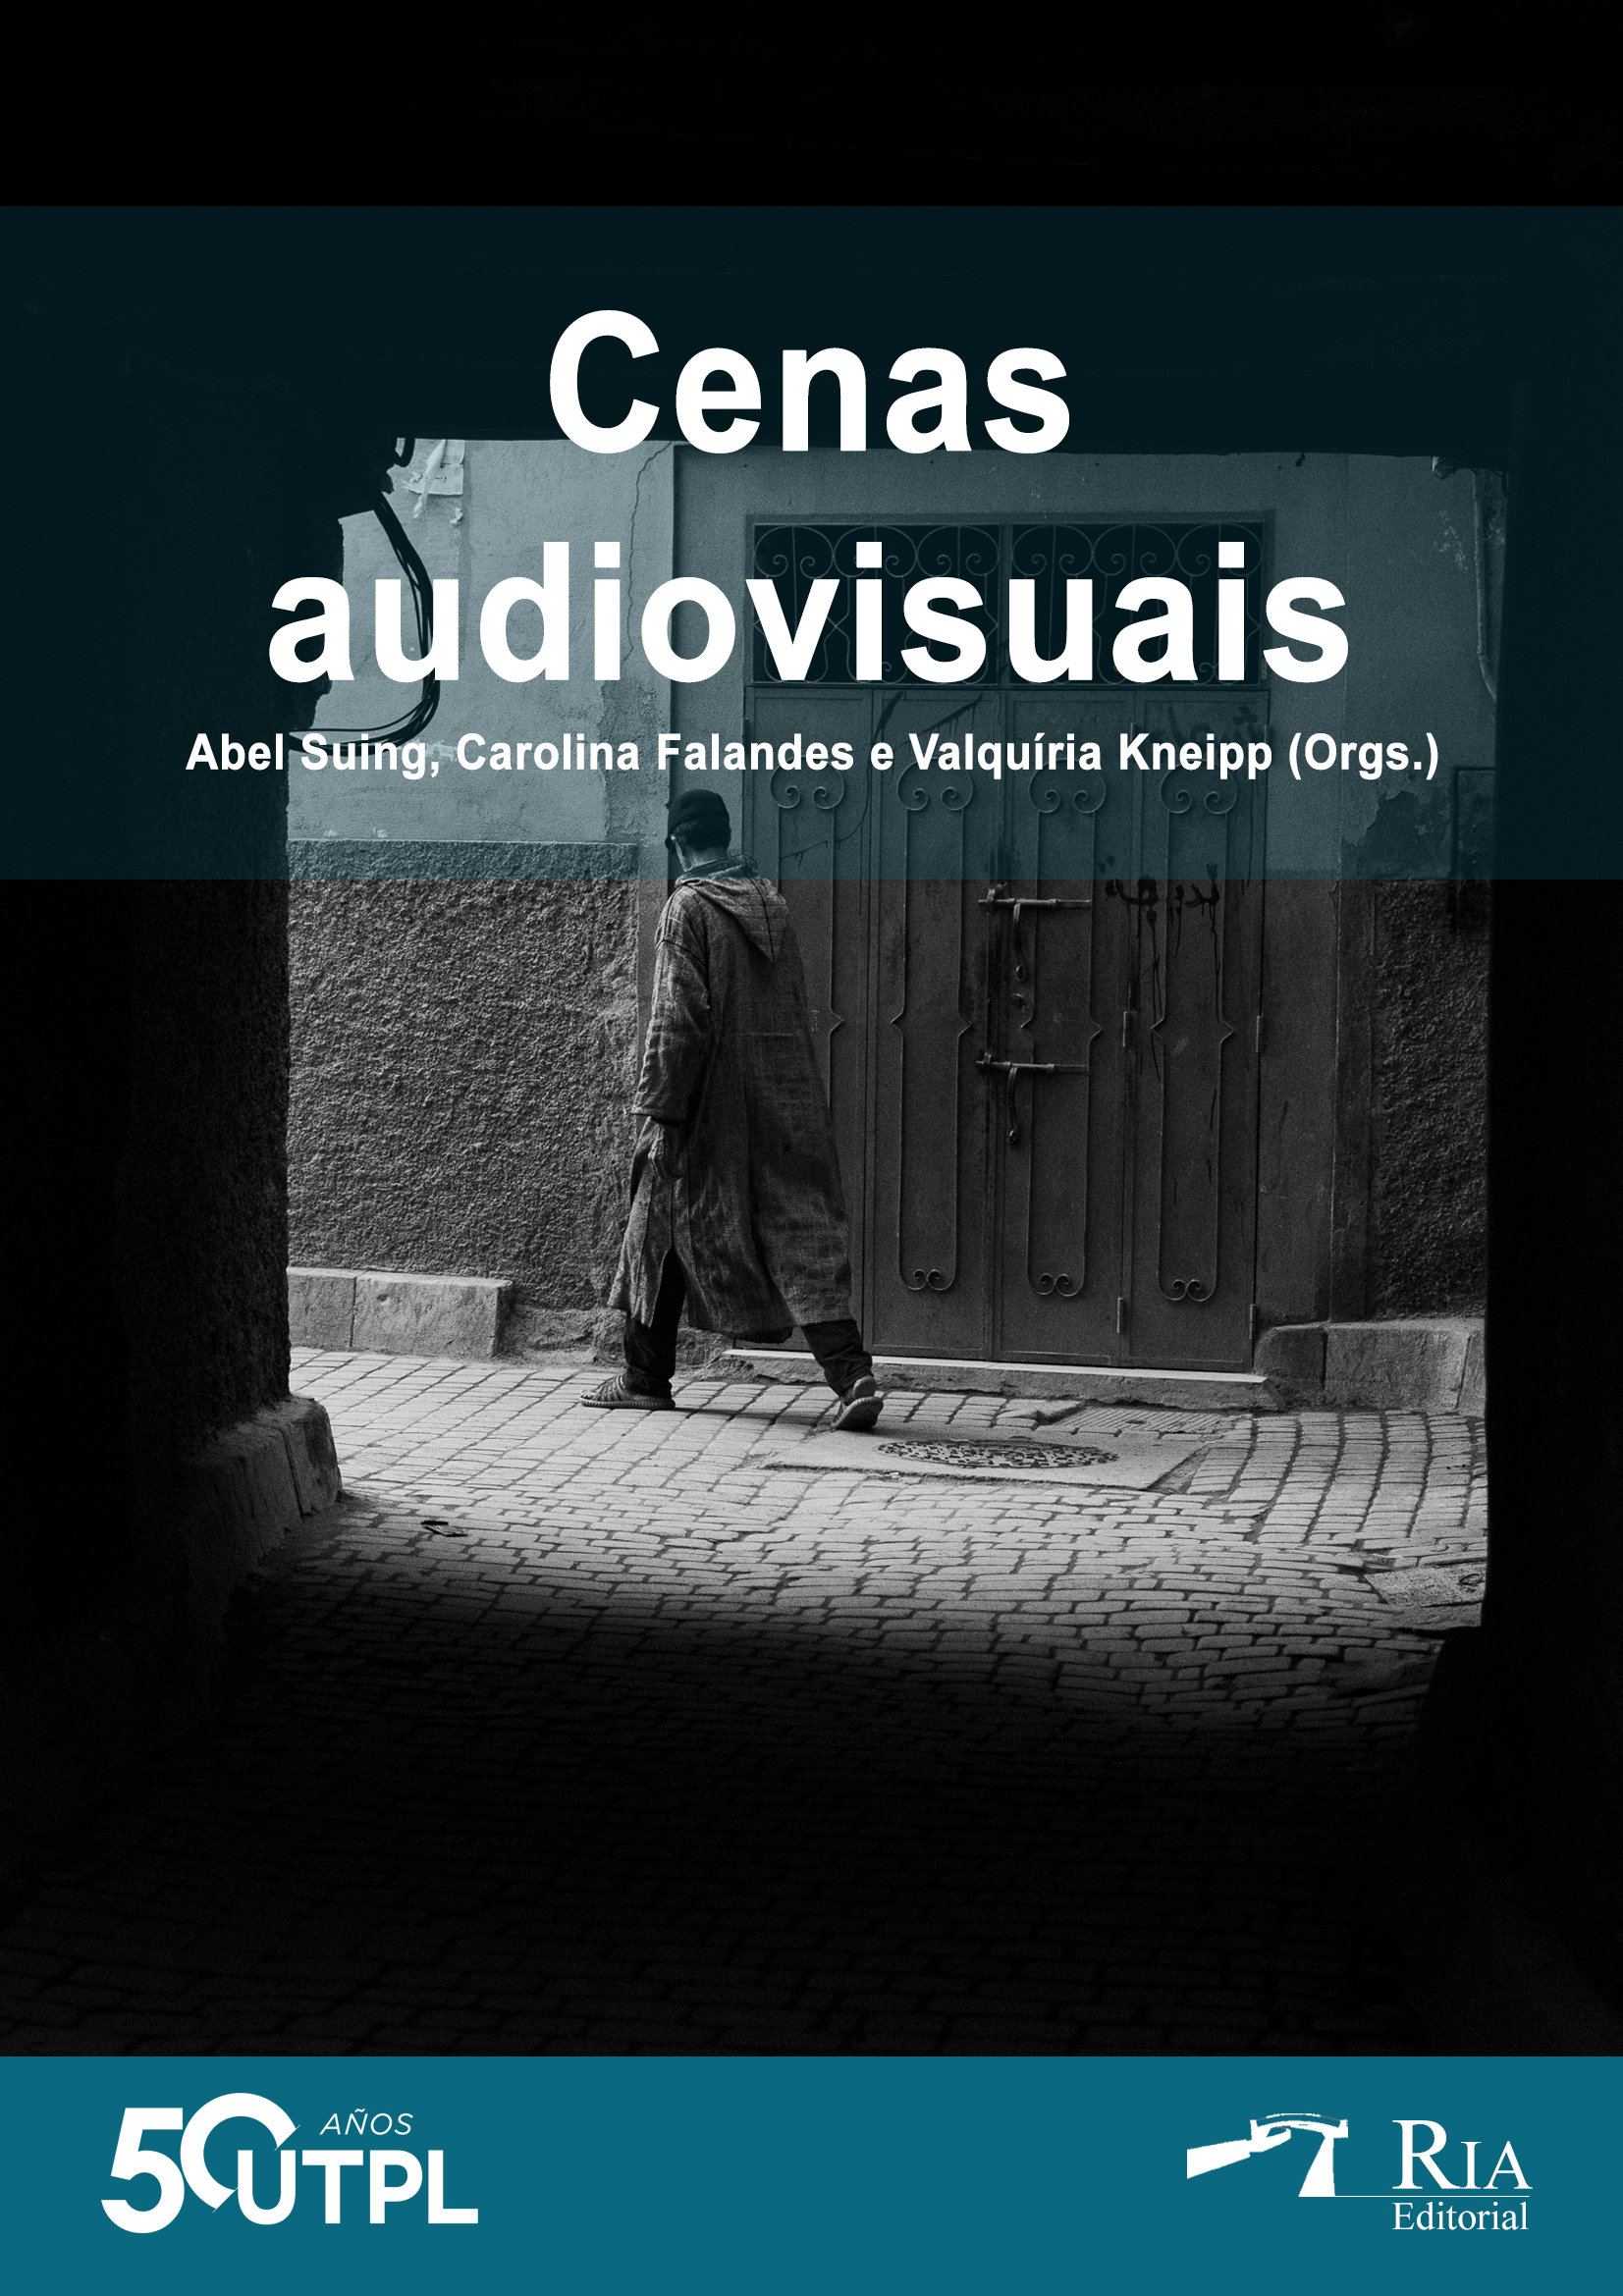 Imagen de portada del libro Cenas audiovisuais